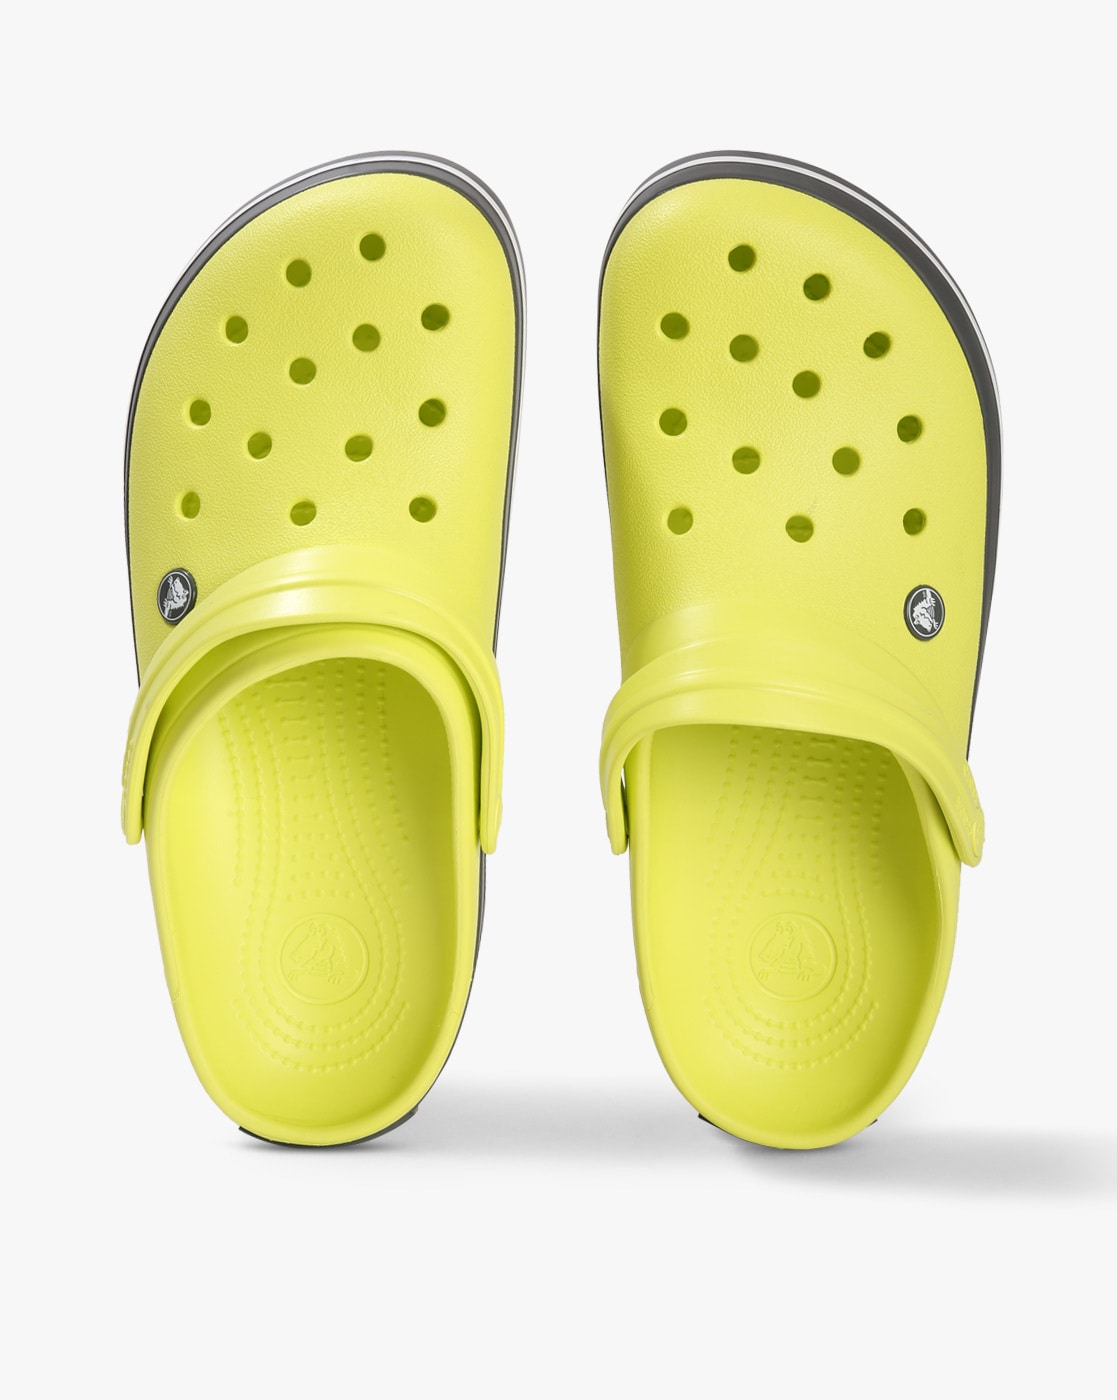 yellow and green crocs